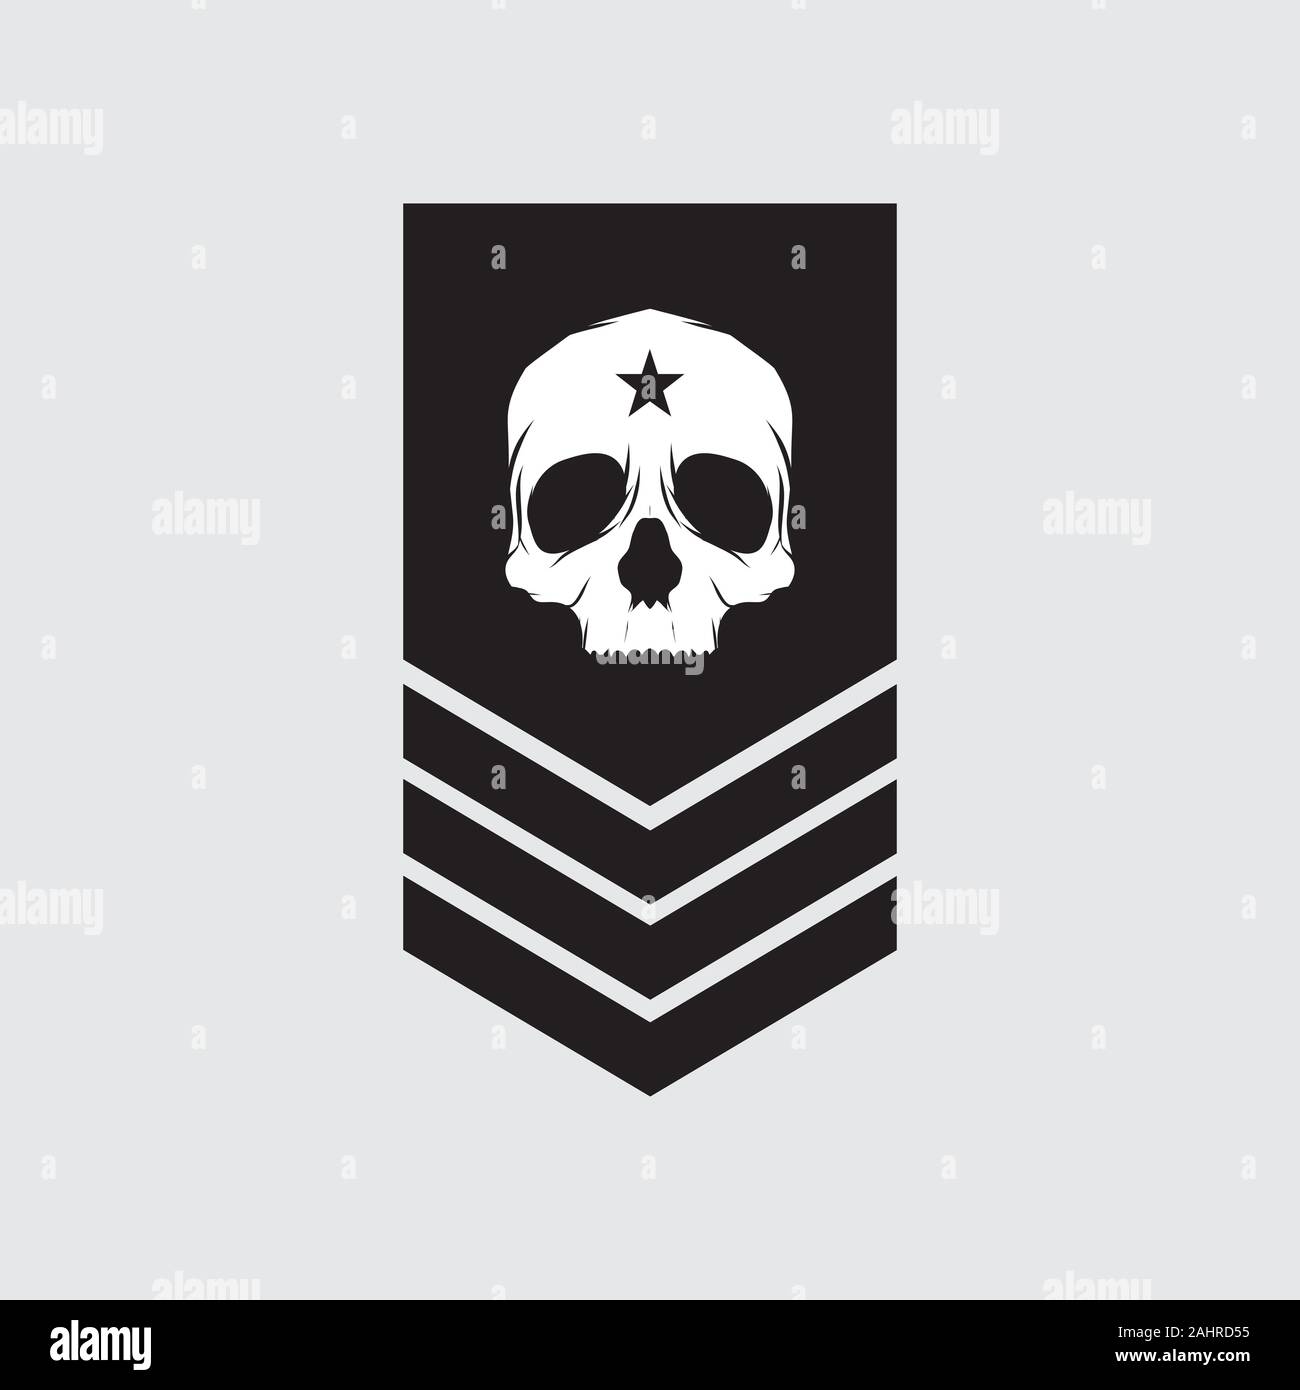 military symbols, Military rank icon vector Stock Vector